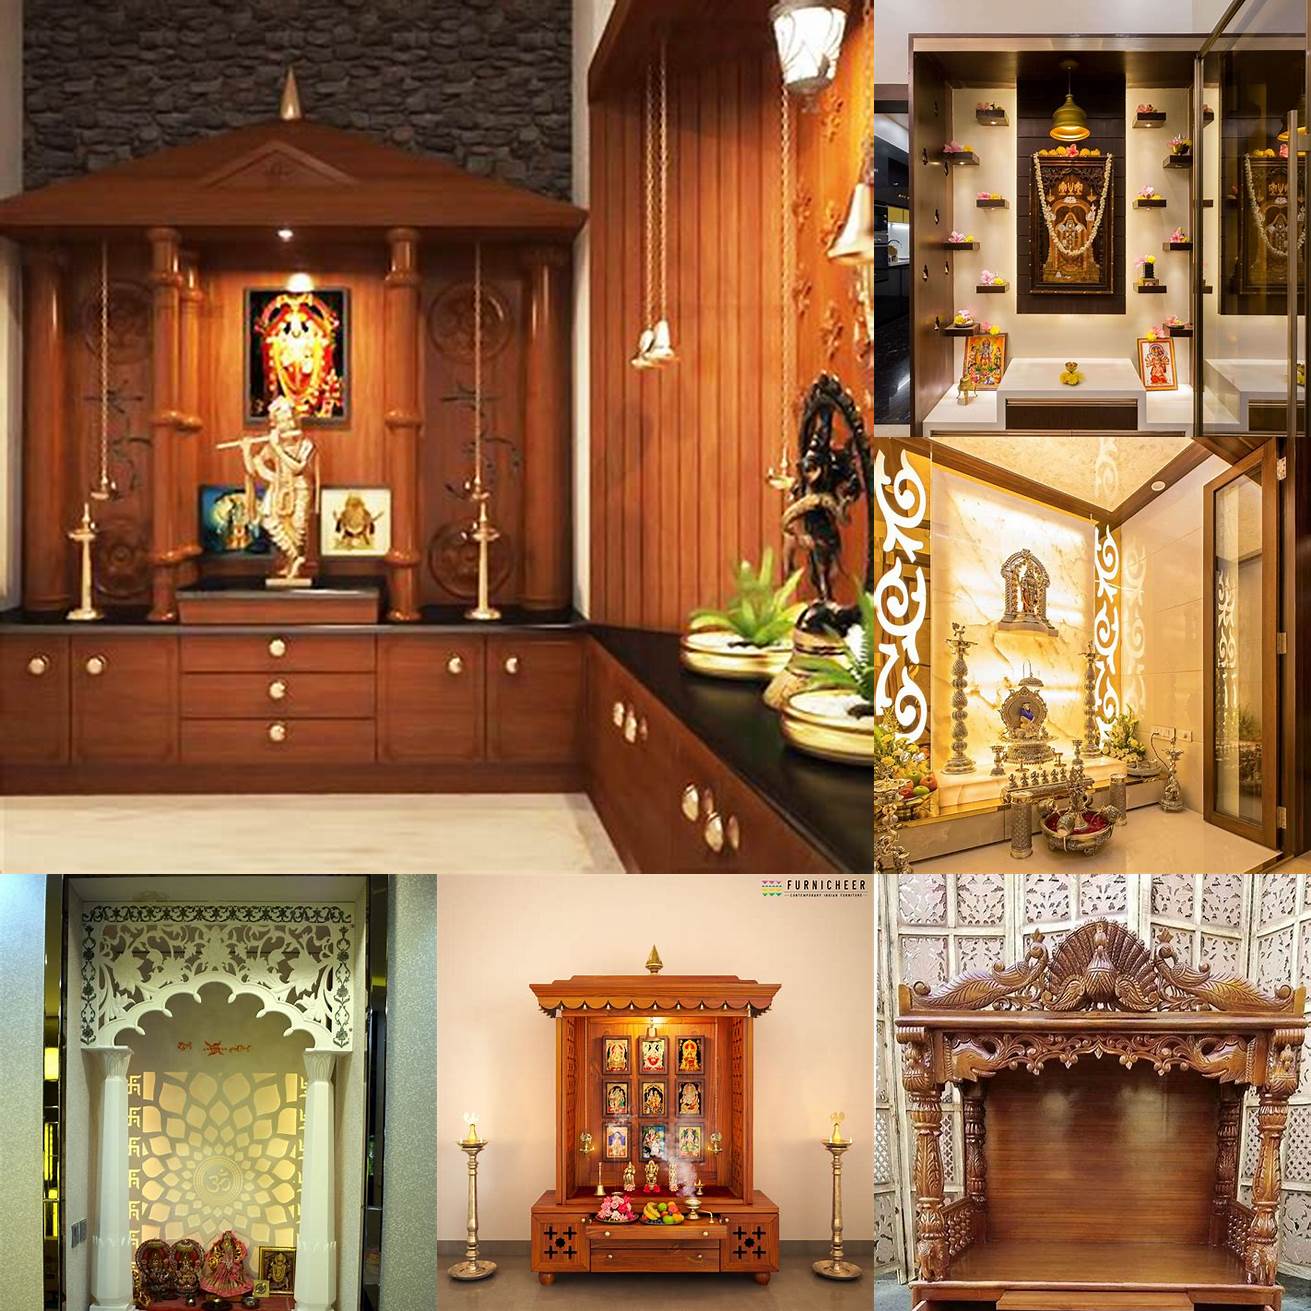 Wooden temple interior